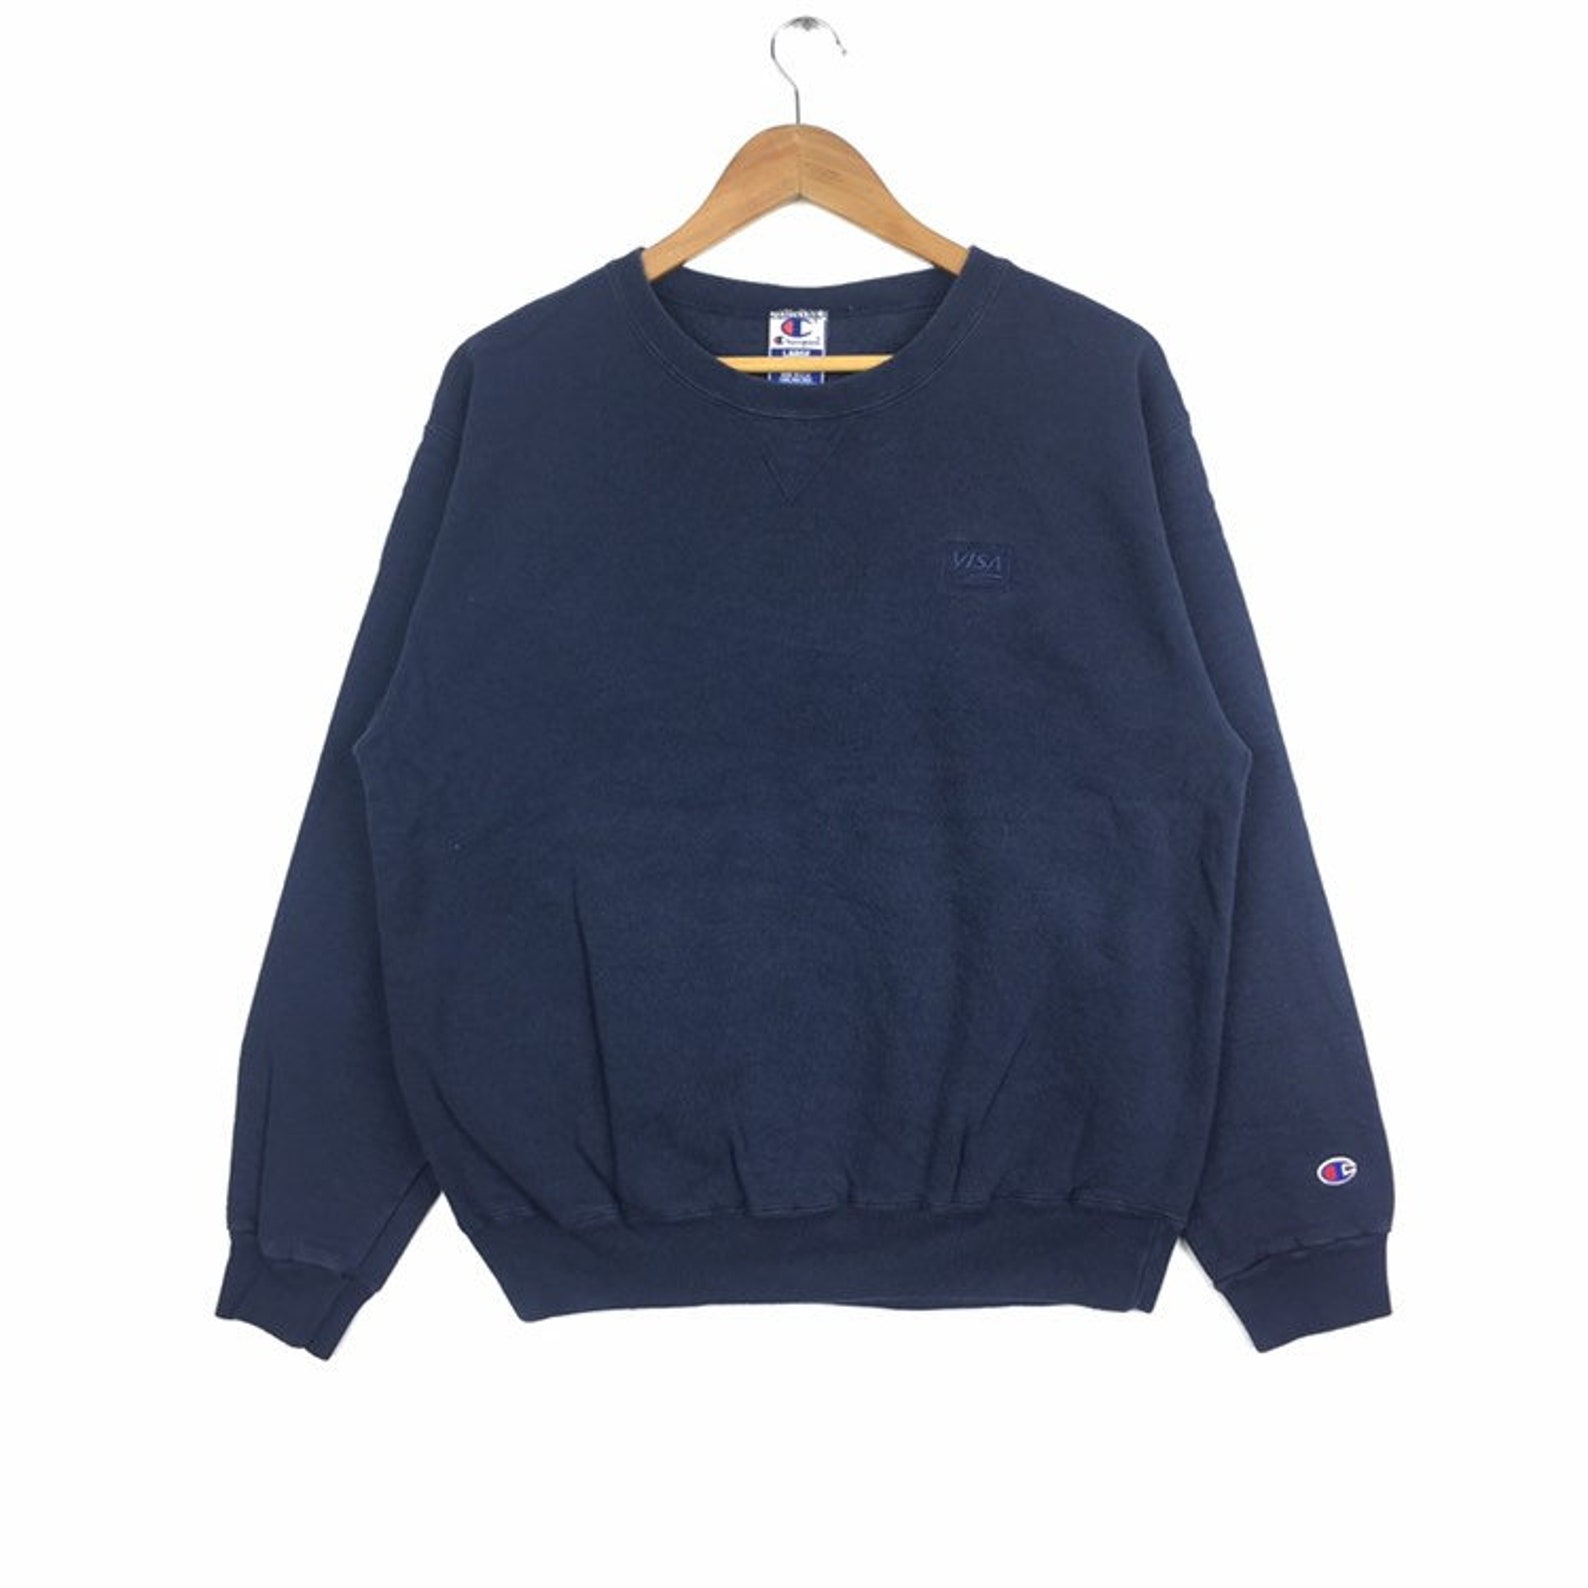 Vintage champion sweatshirt Casual Jumper Streetwear pullover | Etsy